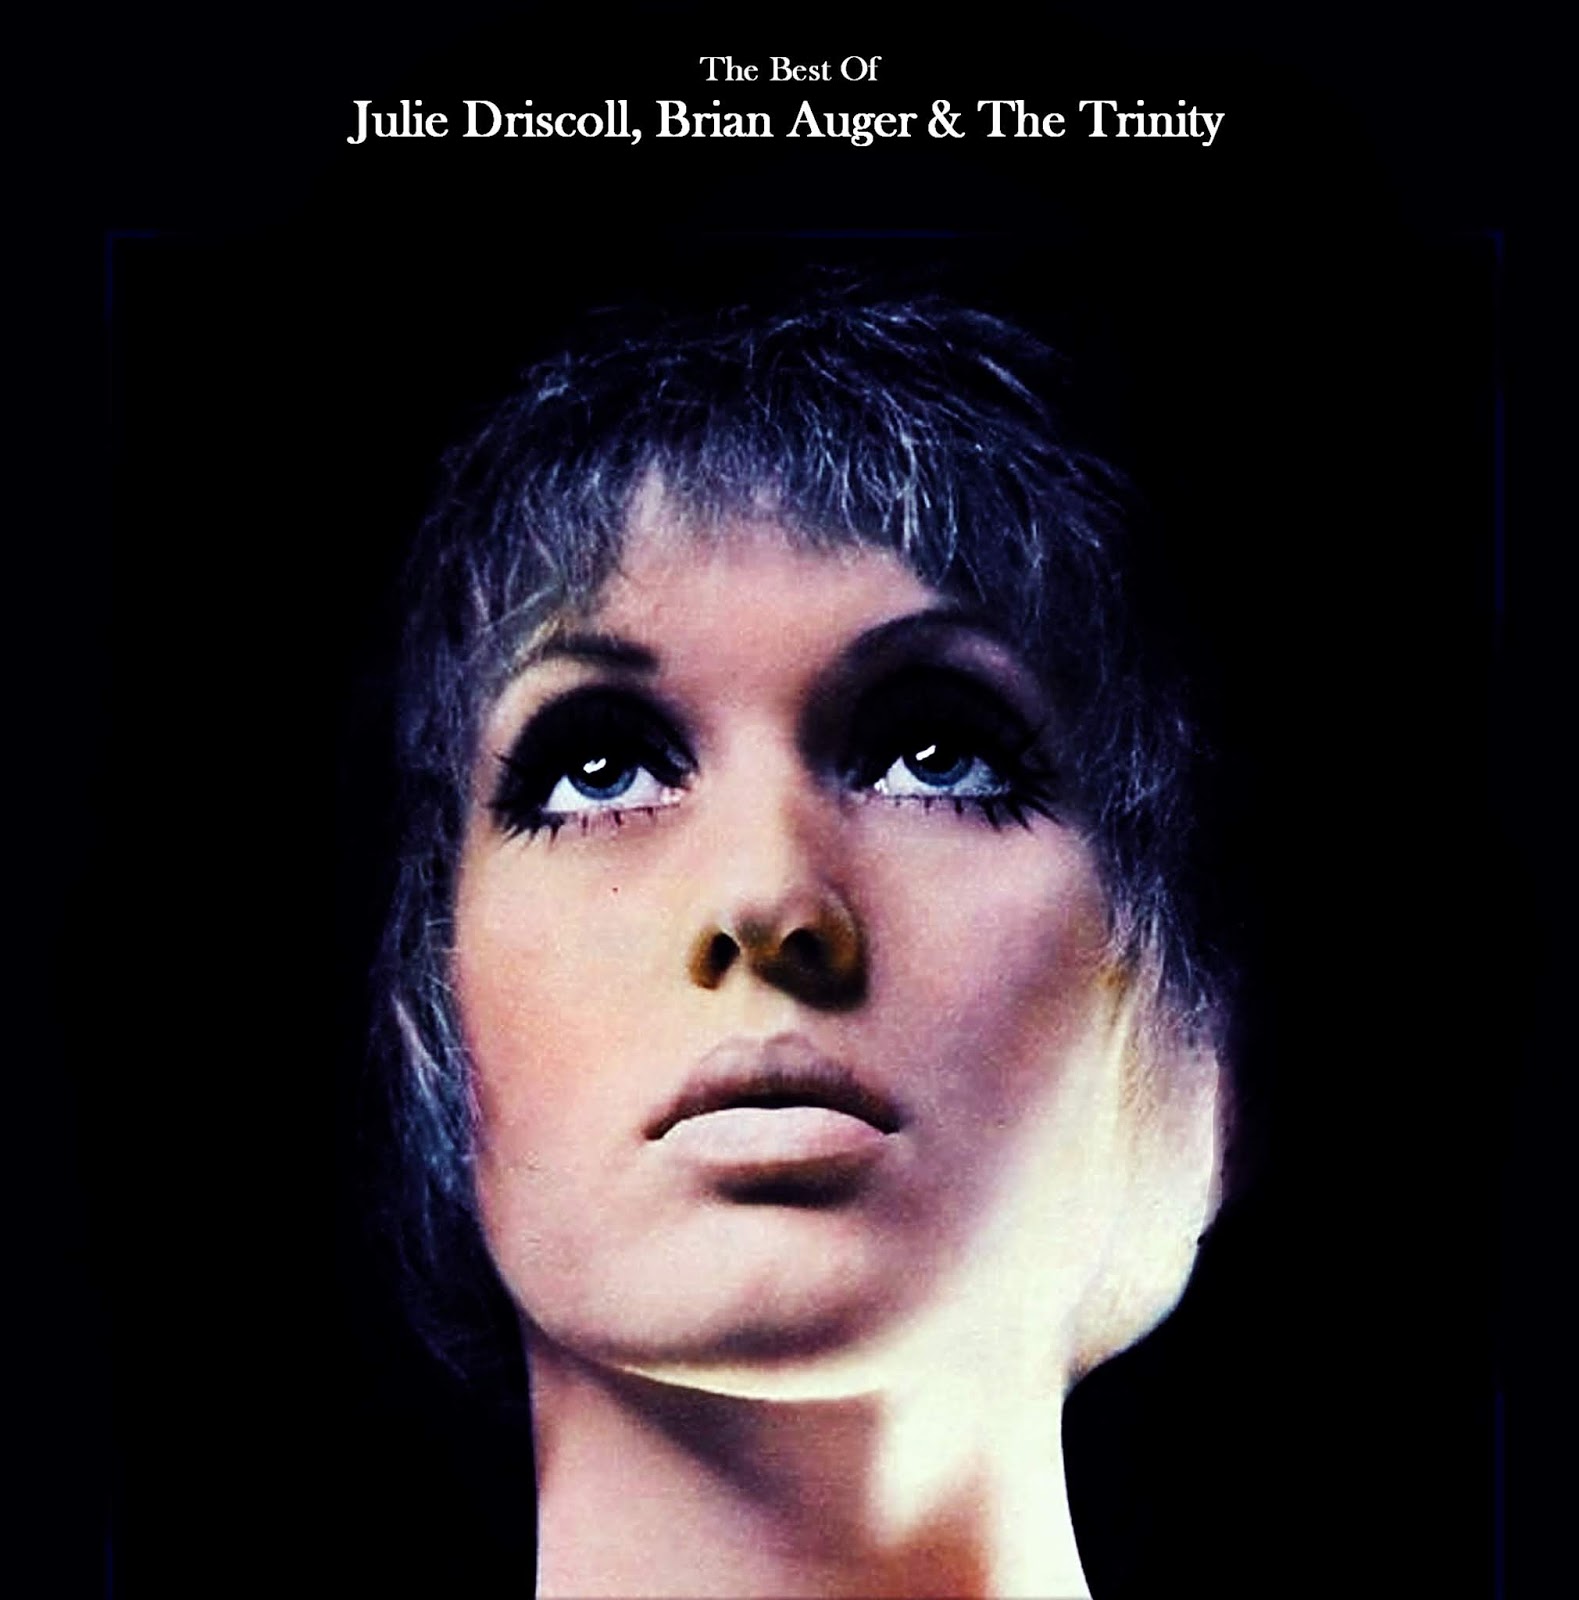 Persona voksenalderen Som regel Albums Forgotten Reconstructed 2.0: Julie Driscoll, Brian Auger & The  Trinity: "The Best of".(Alternate 2nd version)